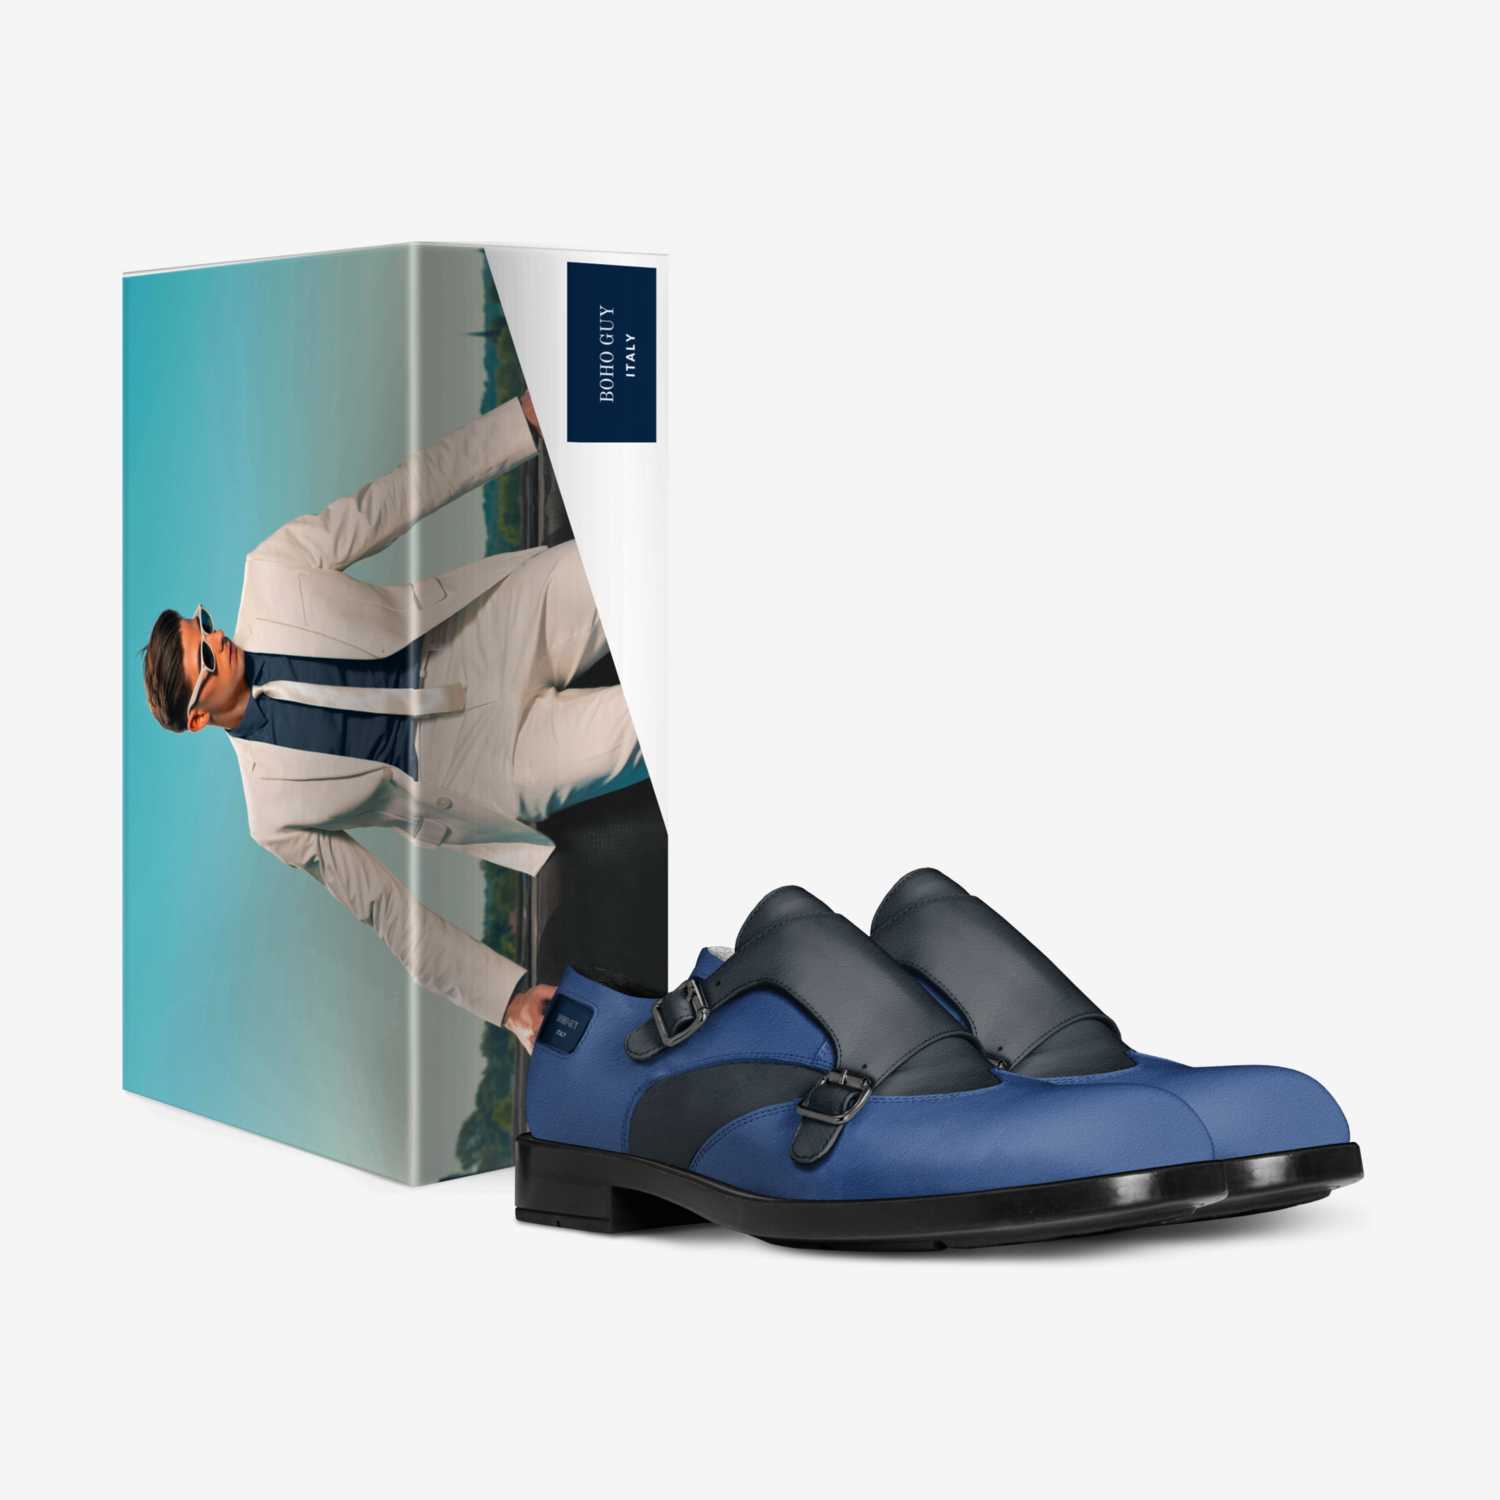 BOHO GUY custom made in Italy shoes by Marijke Verkerk Design | Box view